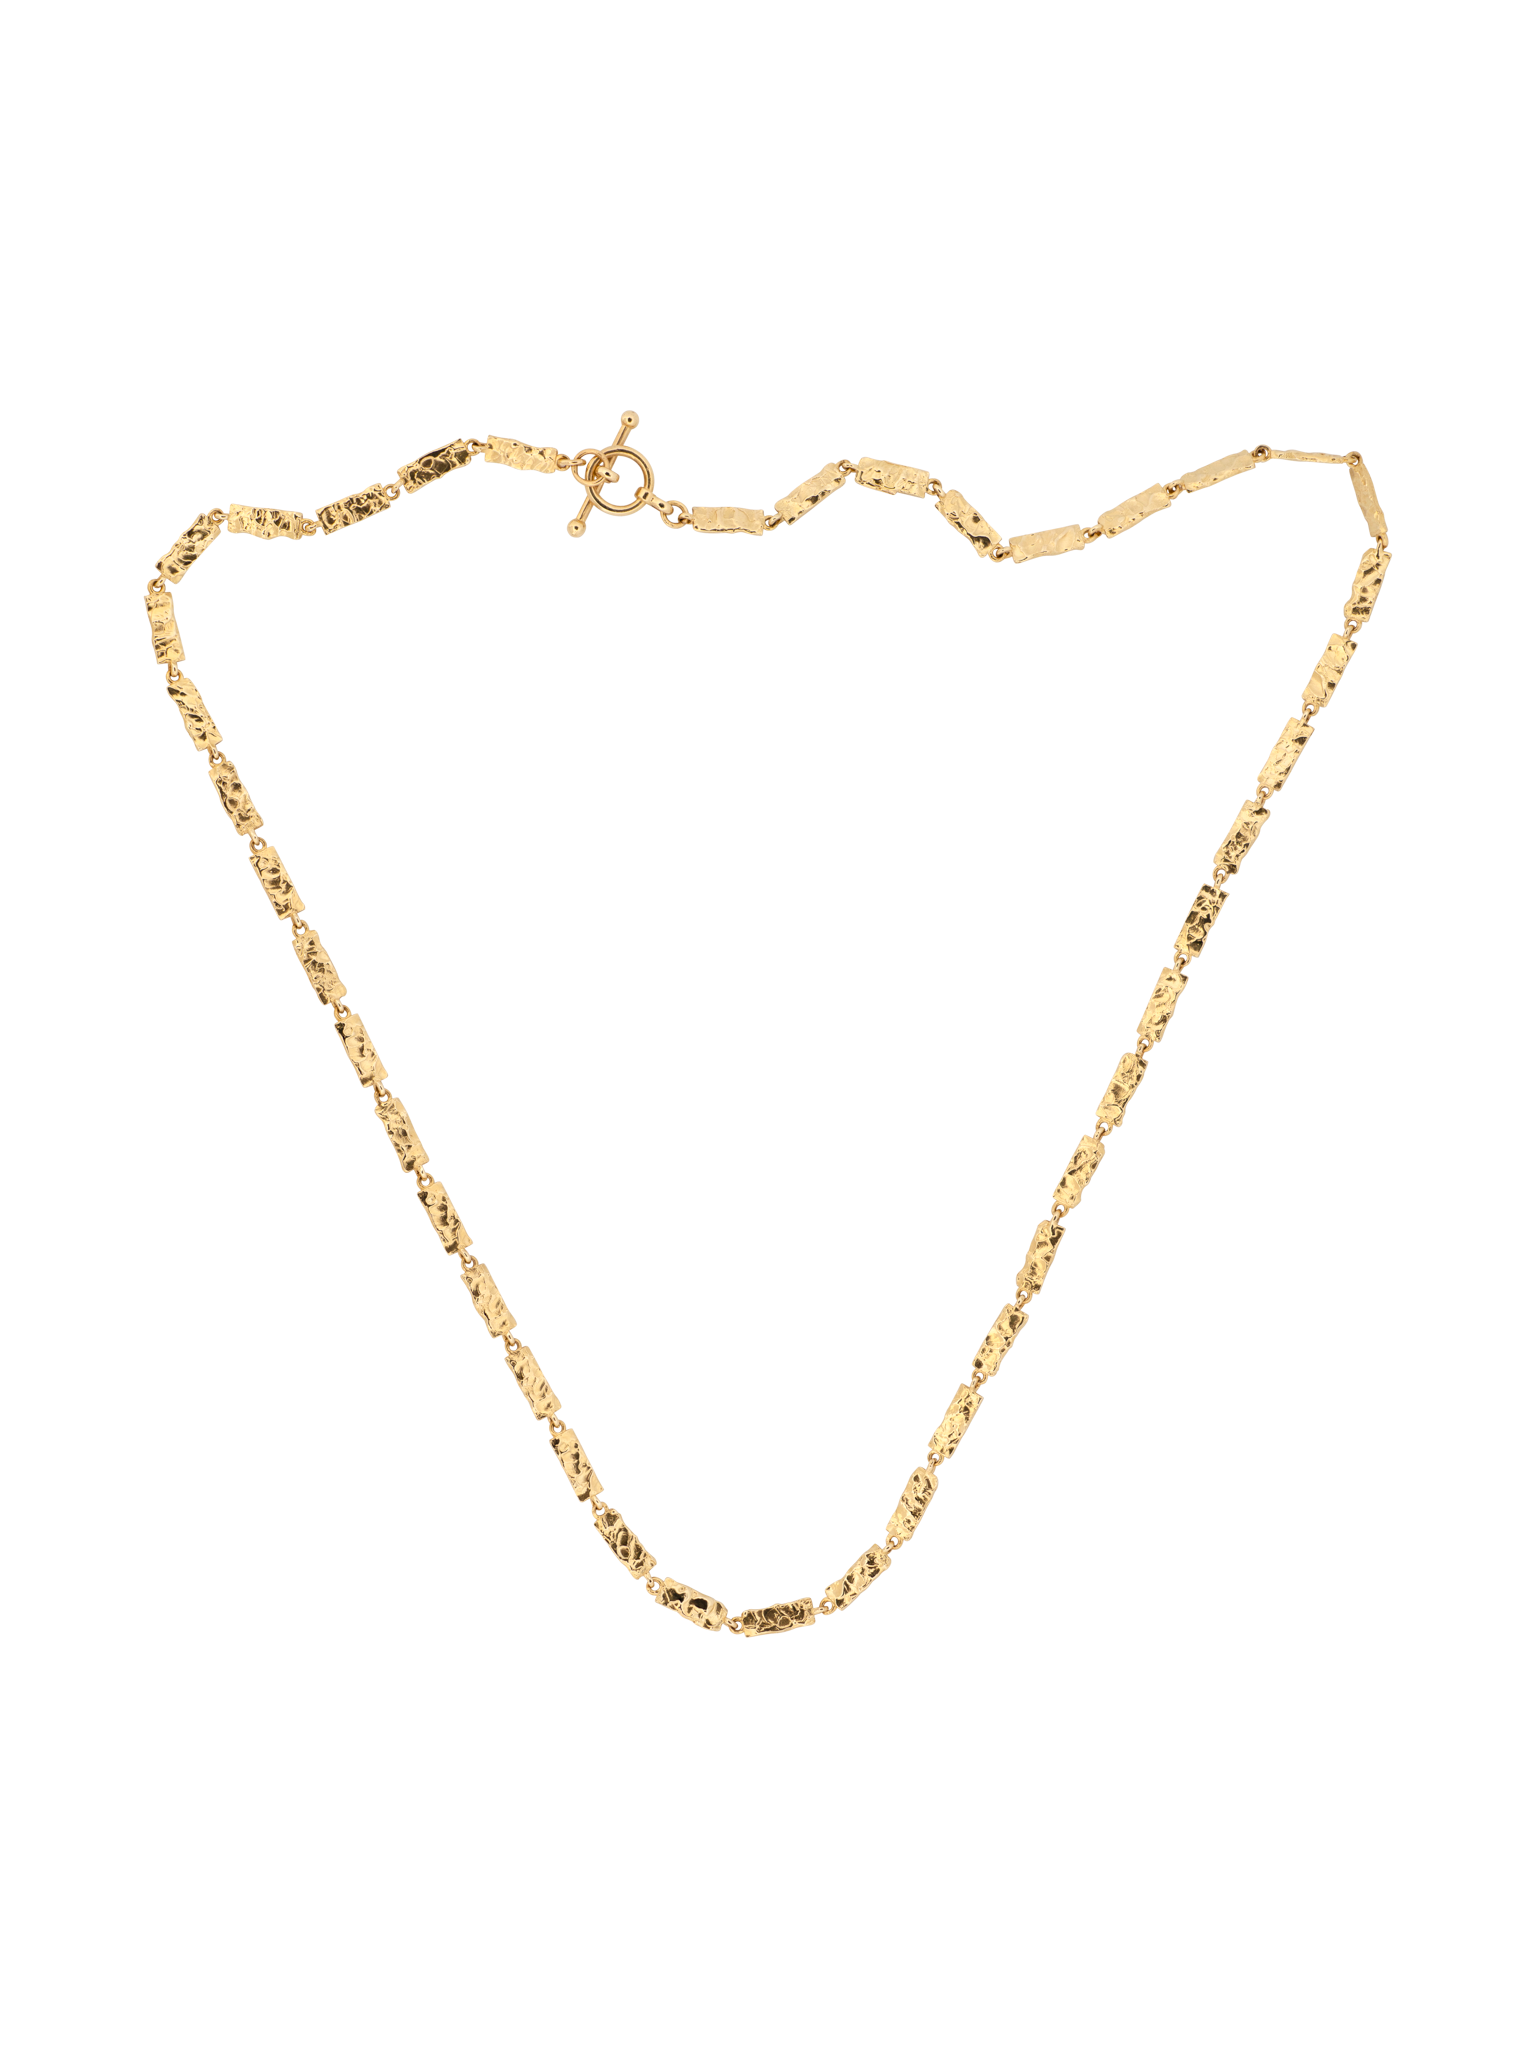 Odette chain necklace video